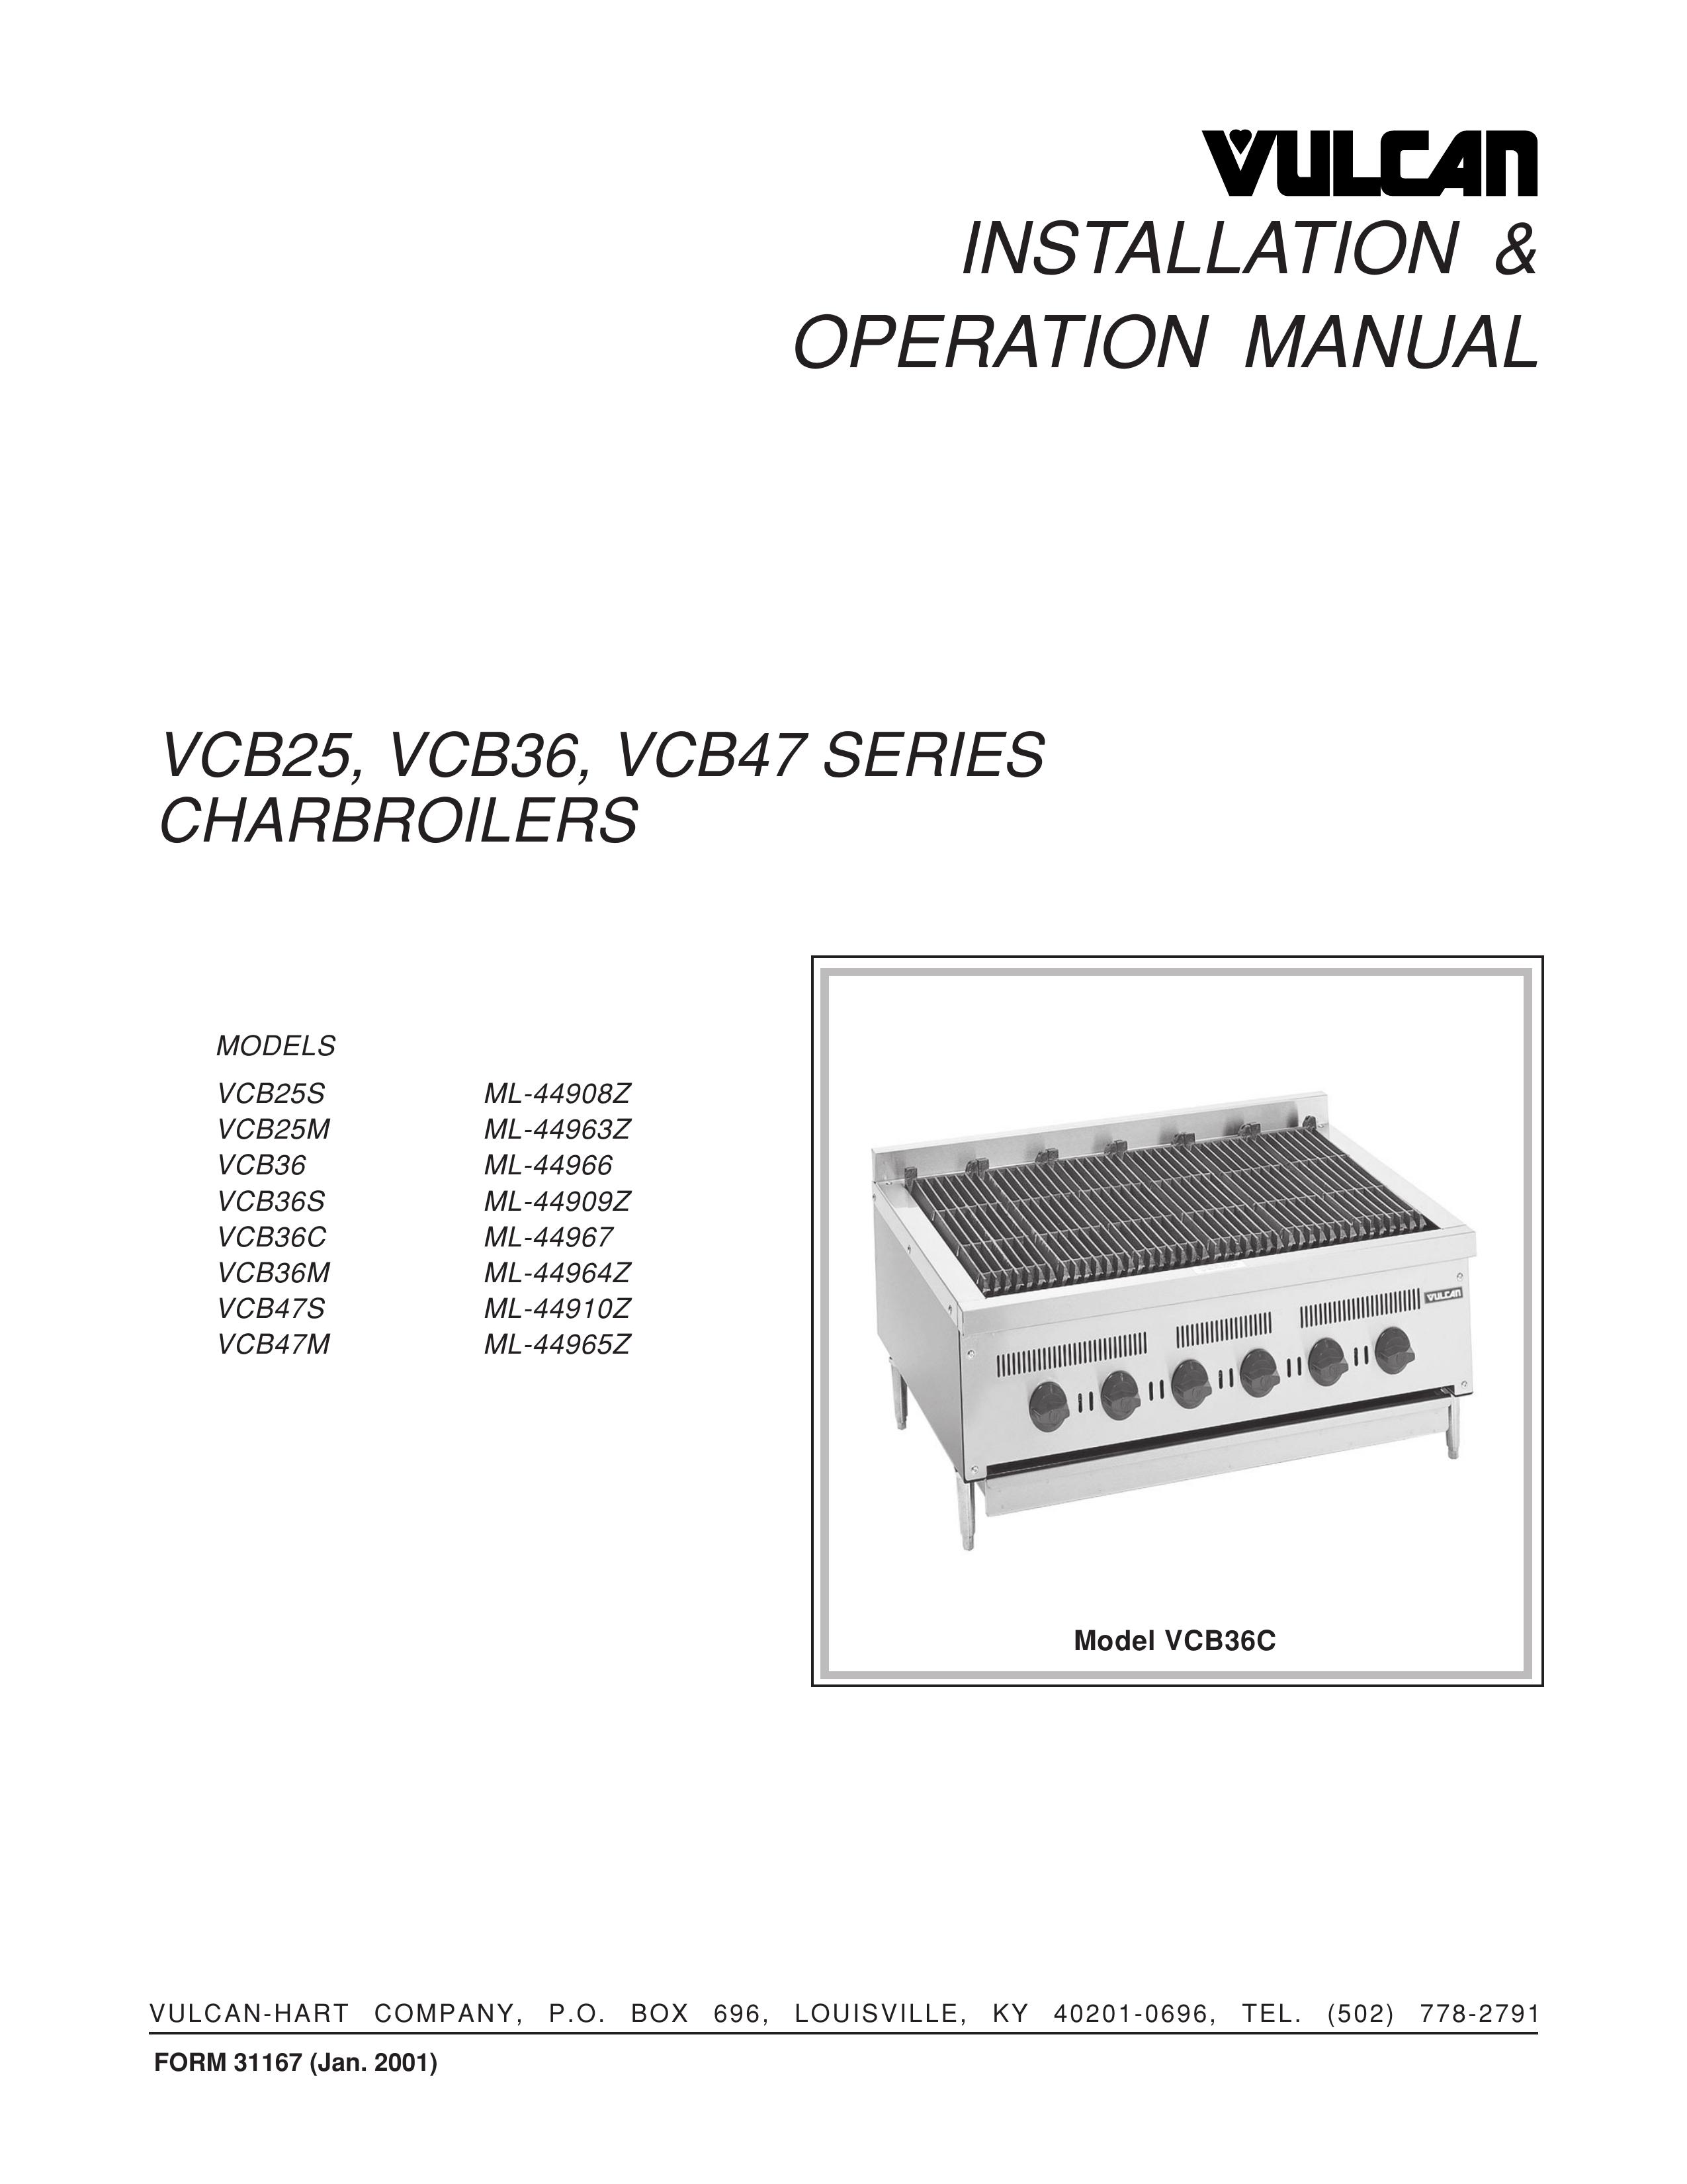 Vulcan-Hart VCB47M ML-44965Z Charcoal Grill User Manual